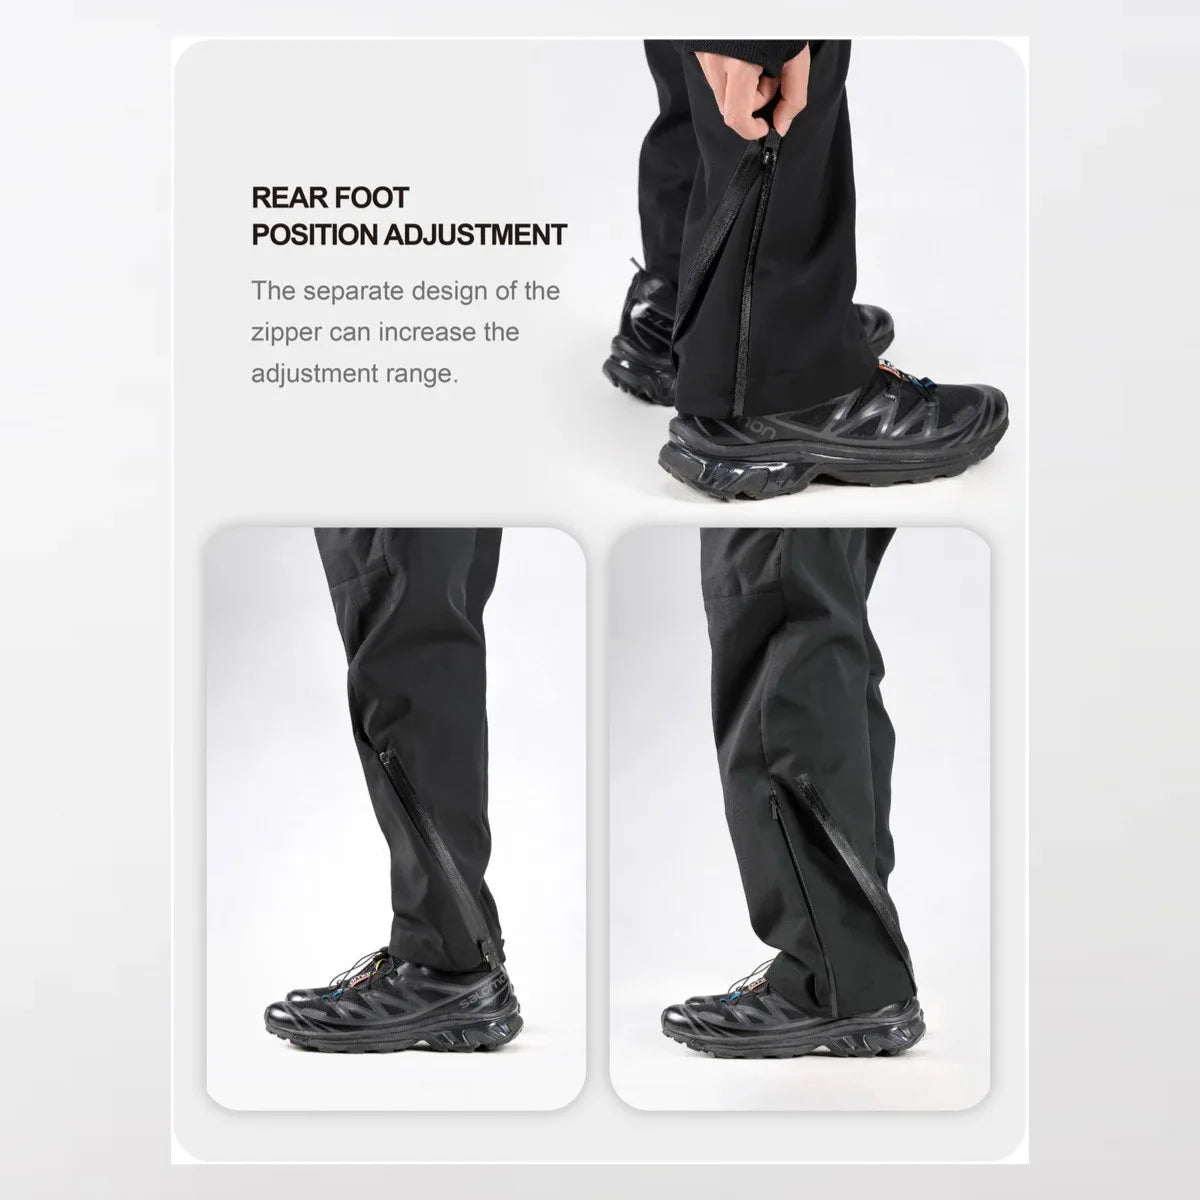 Waterproof Zippered Techwear Pants Details - Clotechnow